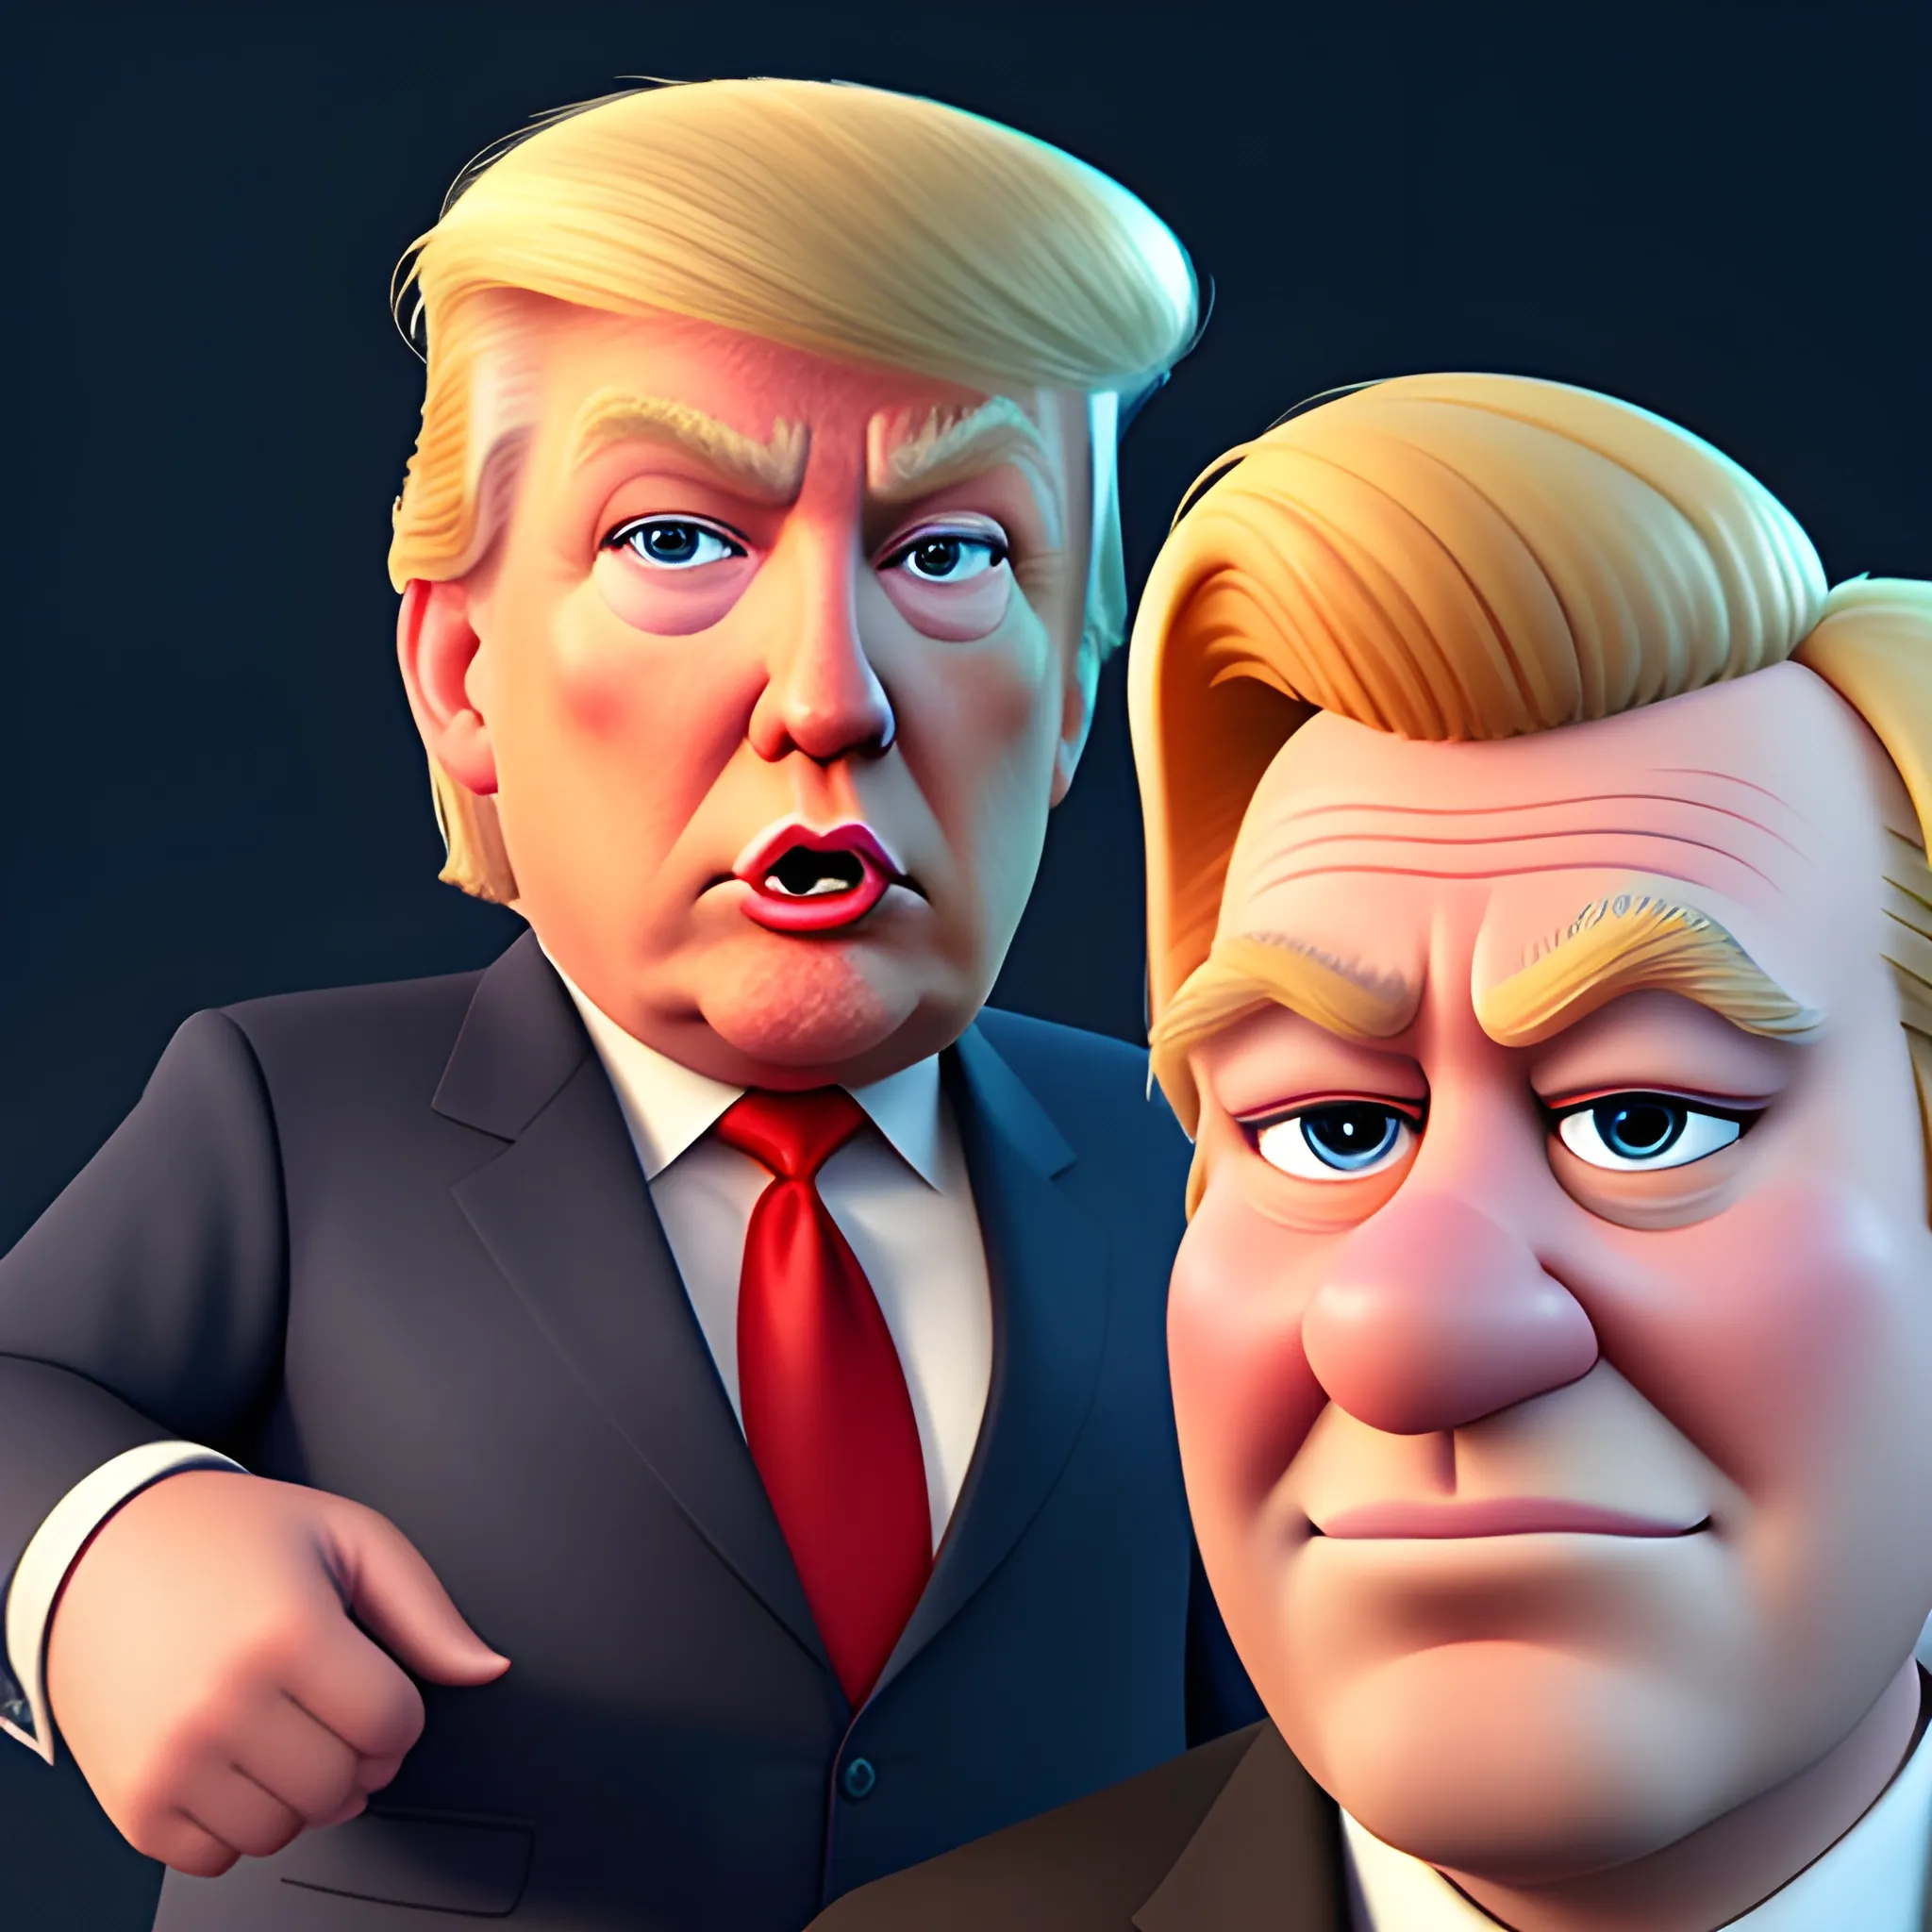 screenshot of donald trump in a pixar movie. 3 d rendering. unreal engine. amazing likeness. very detailed. cartoon caricature.